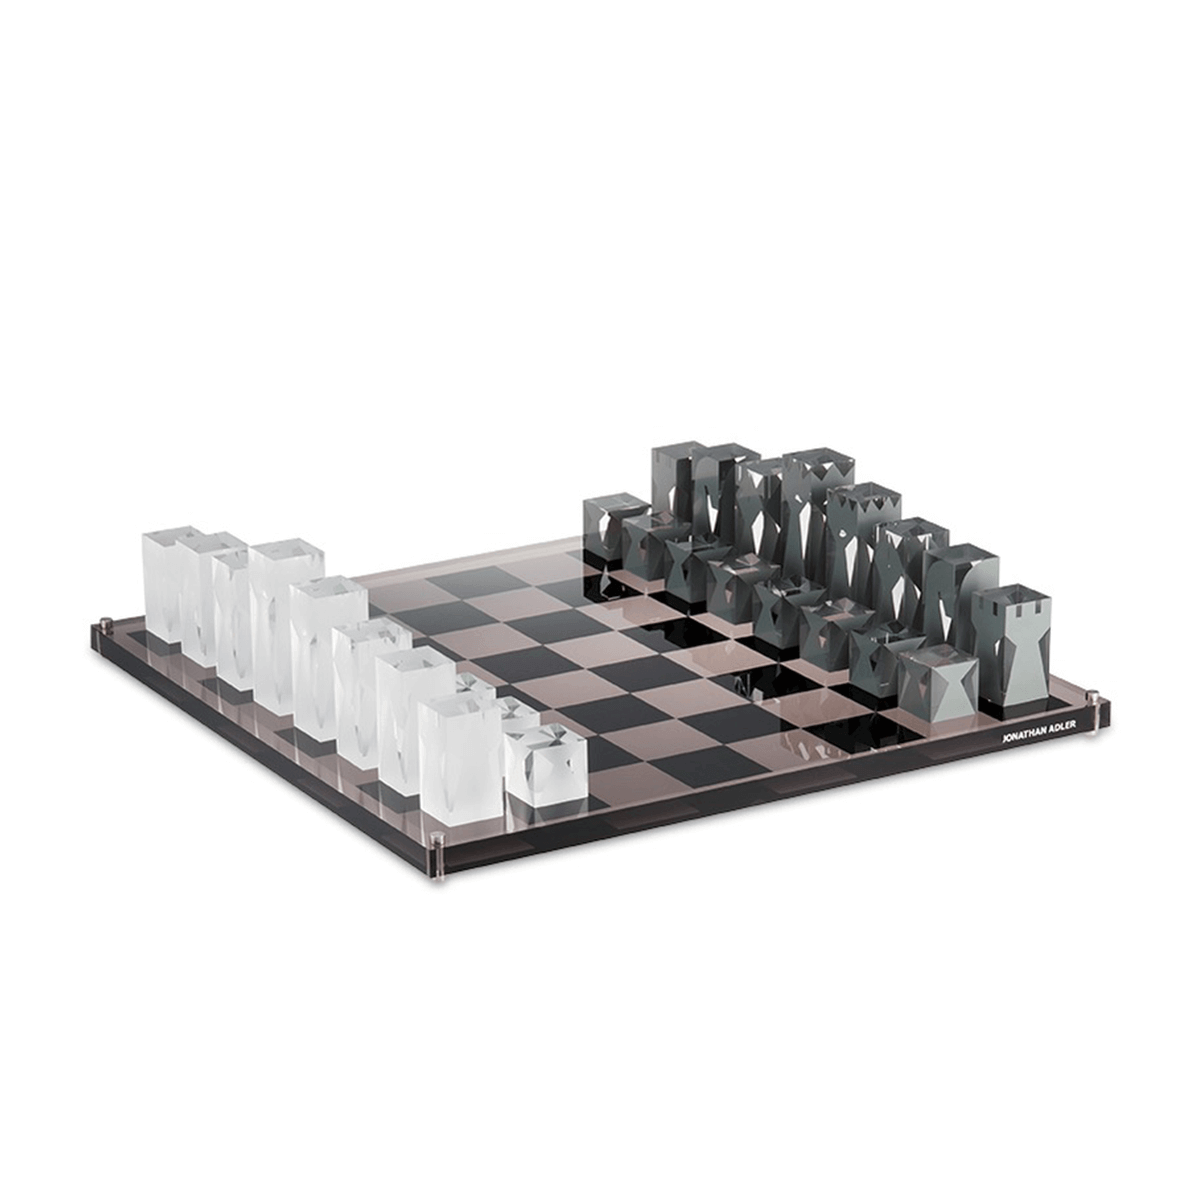 Lucite chess set 